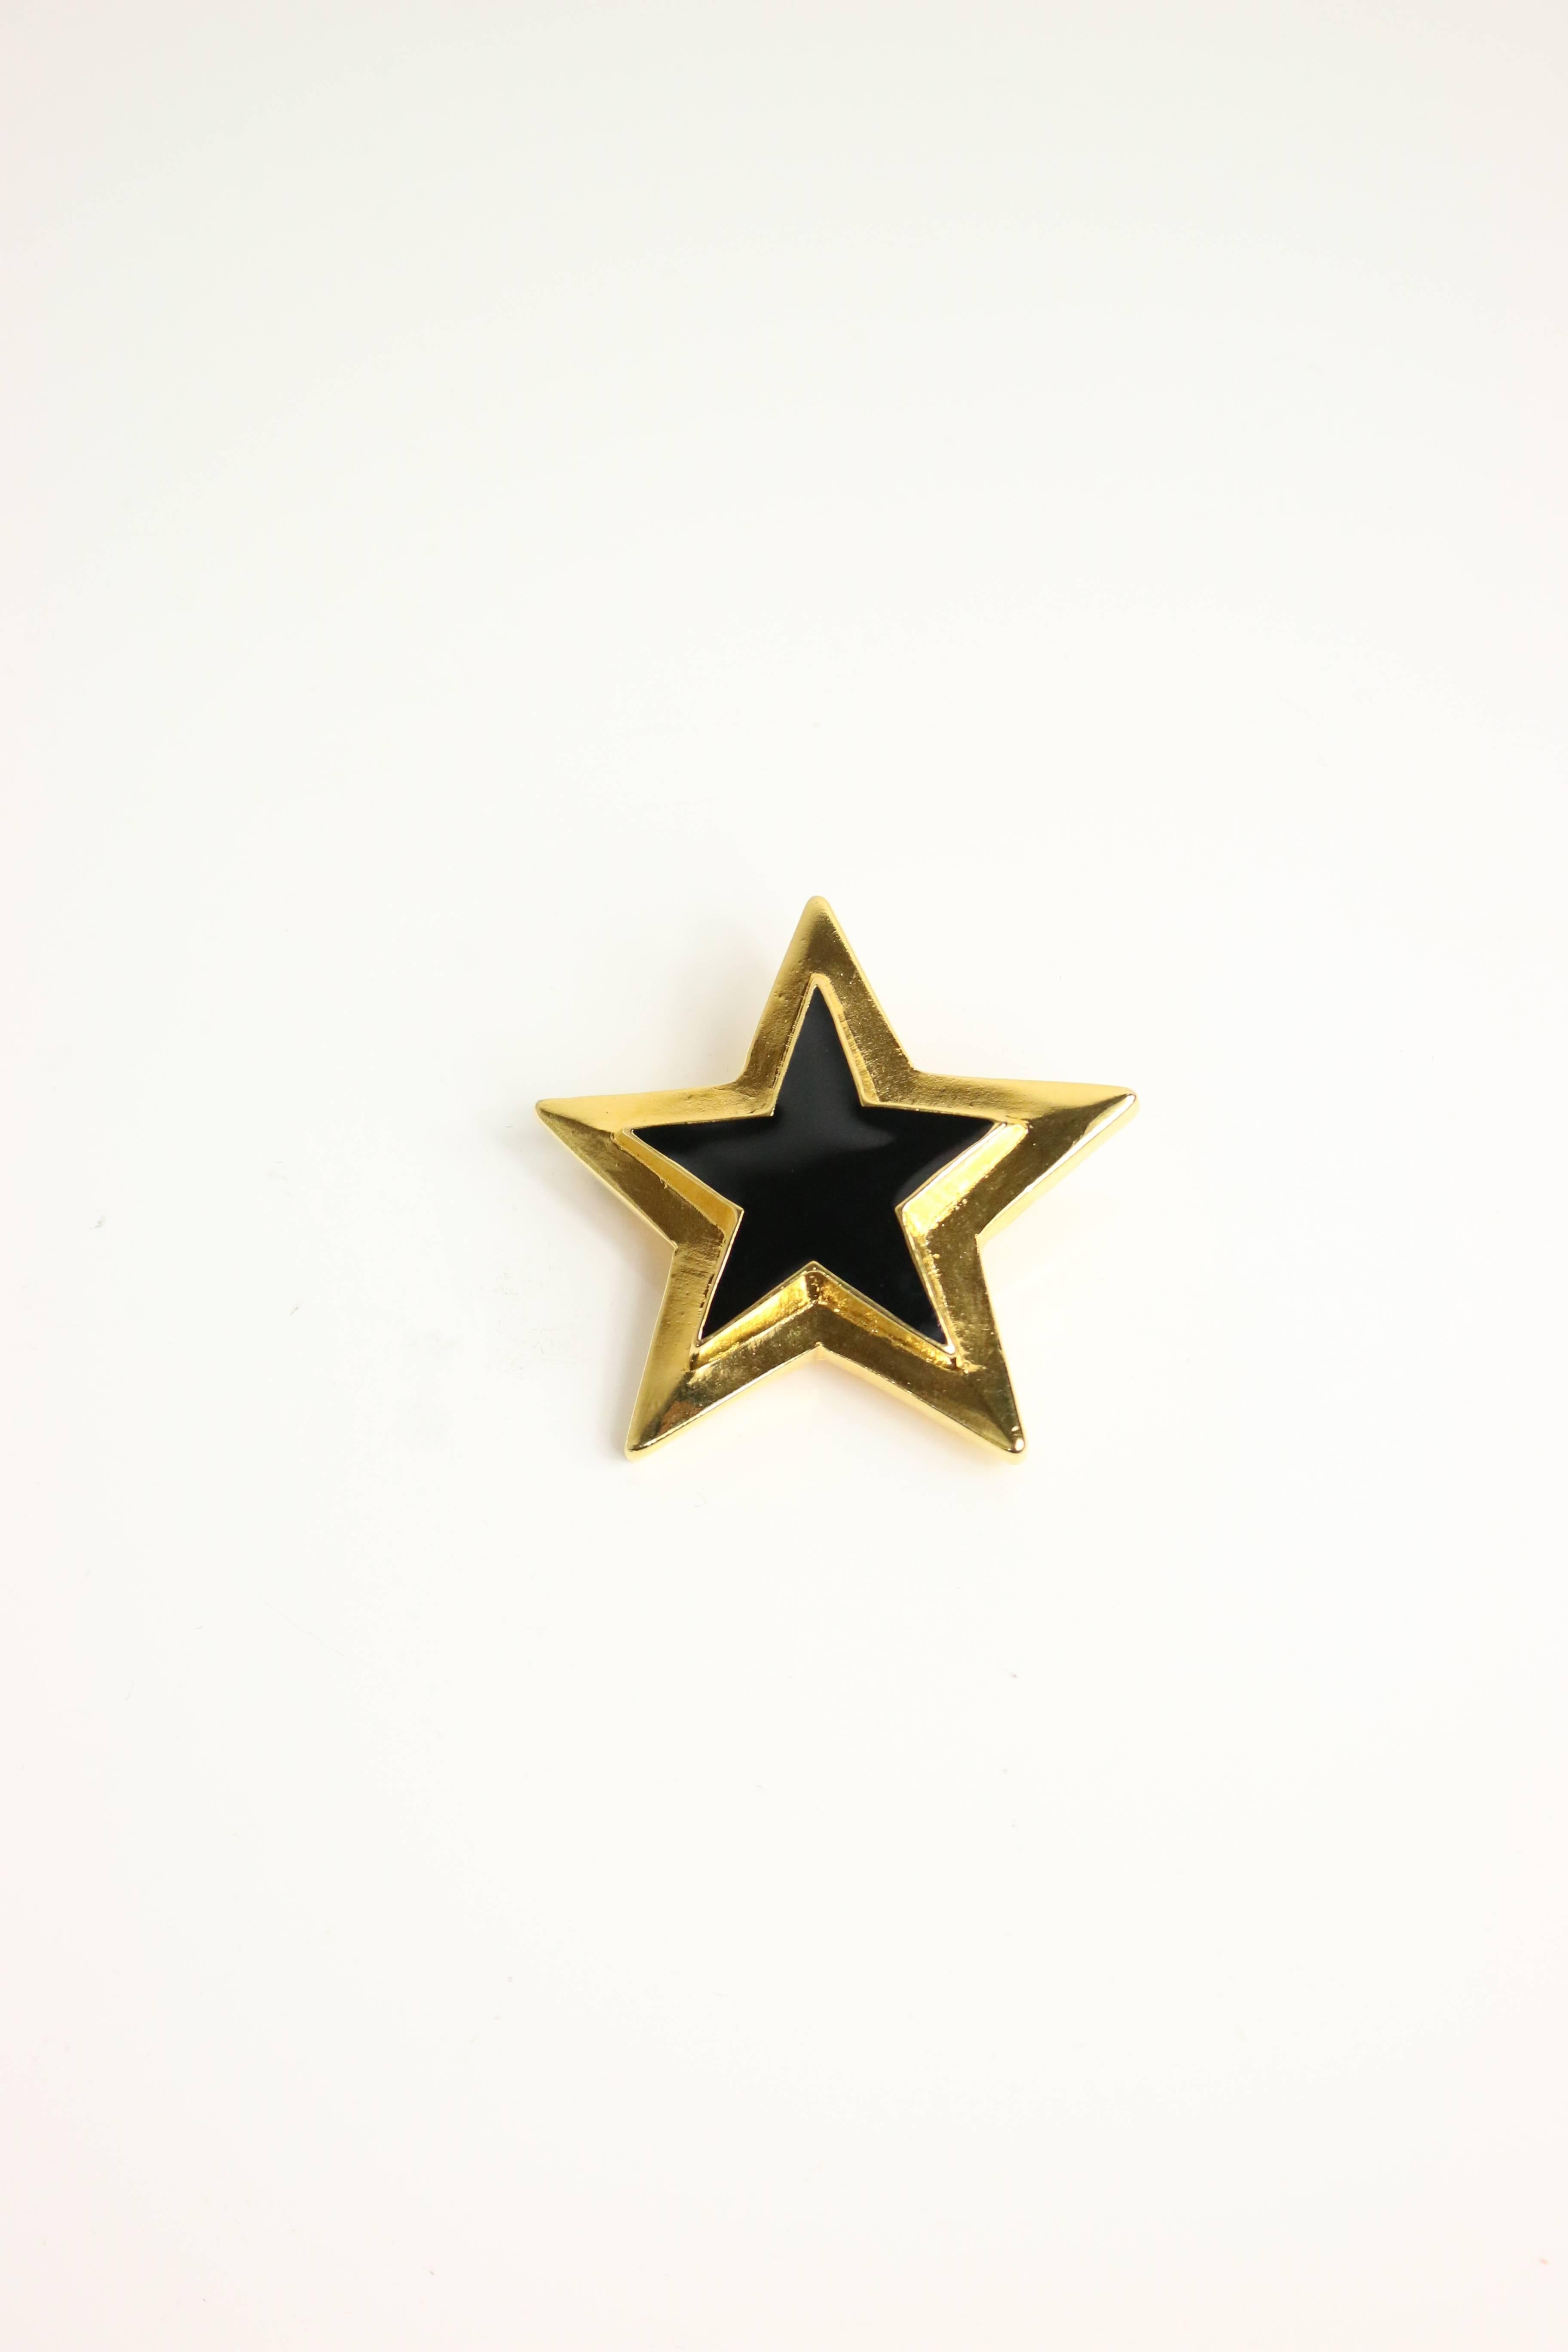 - Vintage 80s Escada gold/black star brooch. 

- Length: 2.5in 

